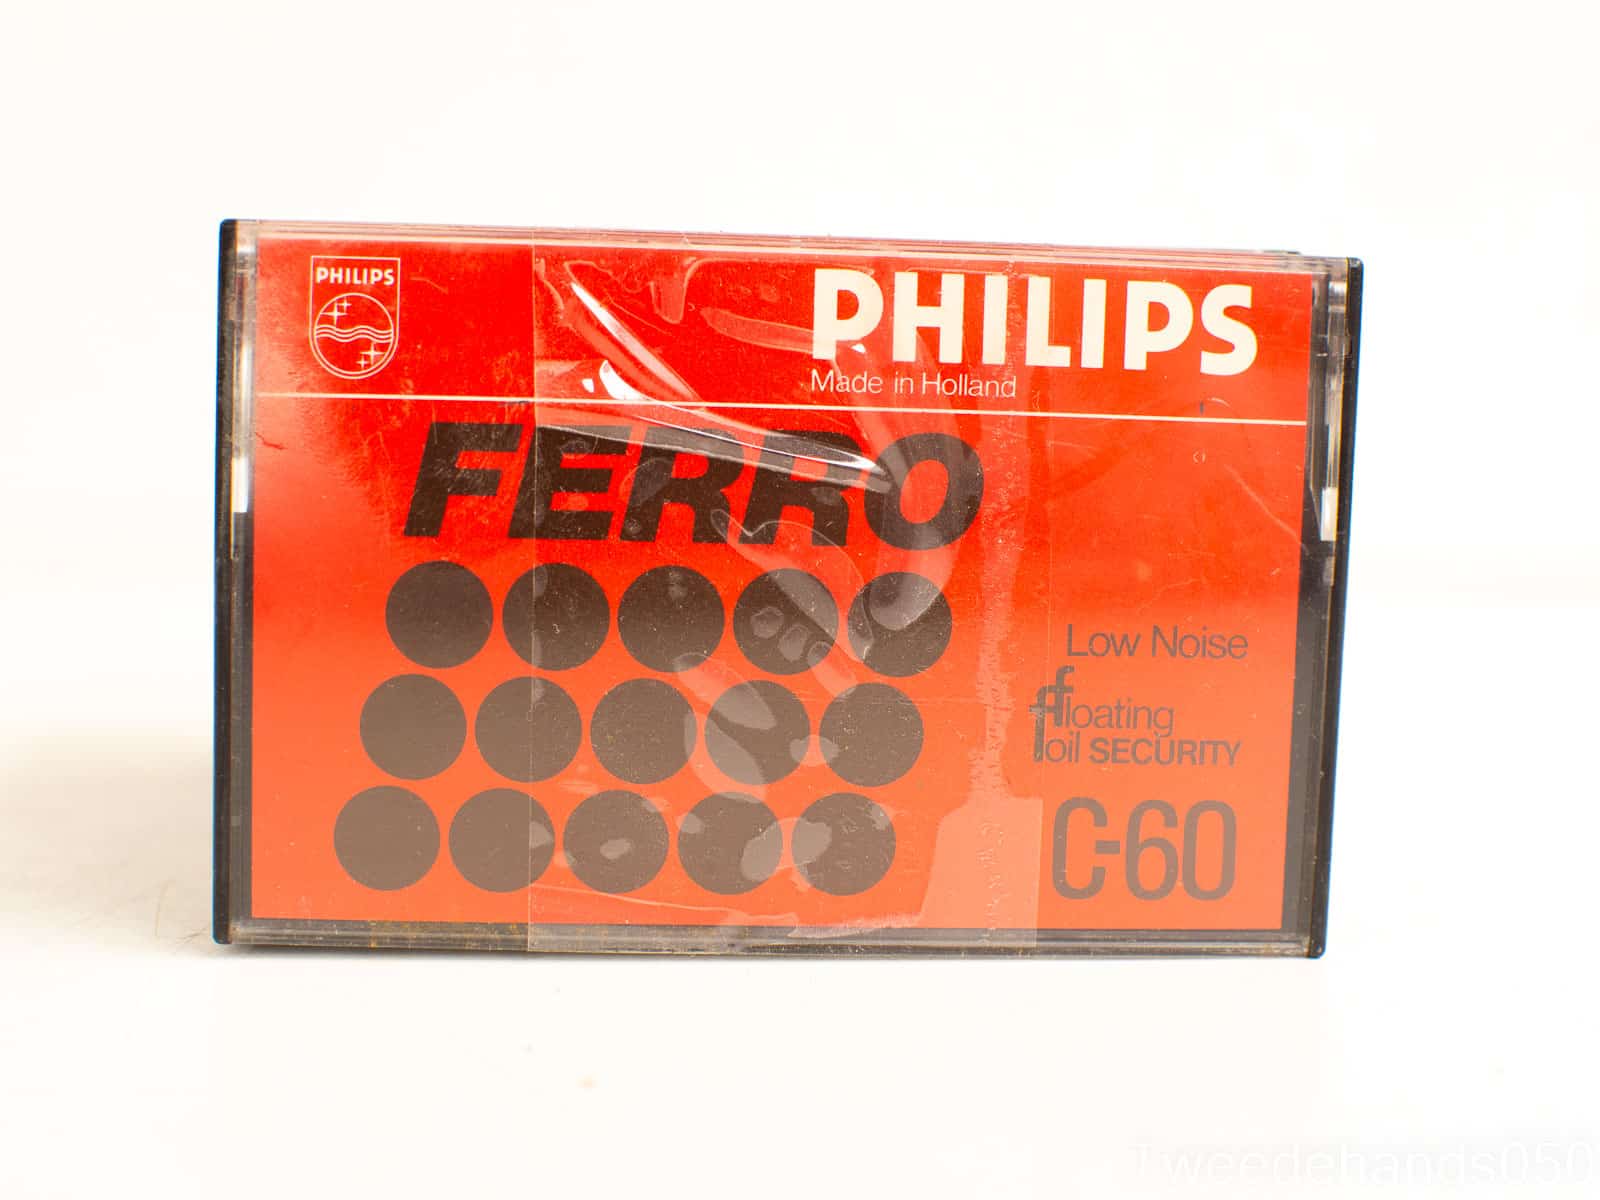 8  philips ferro cassettebandjes 25828